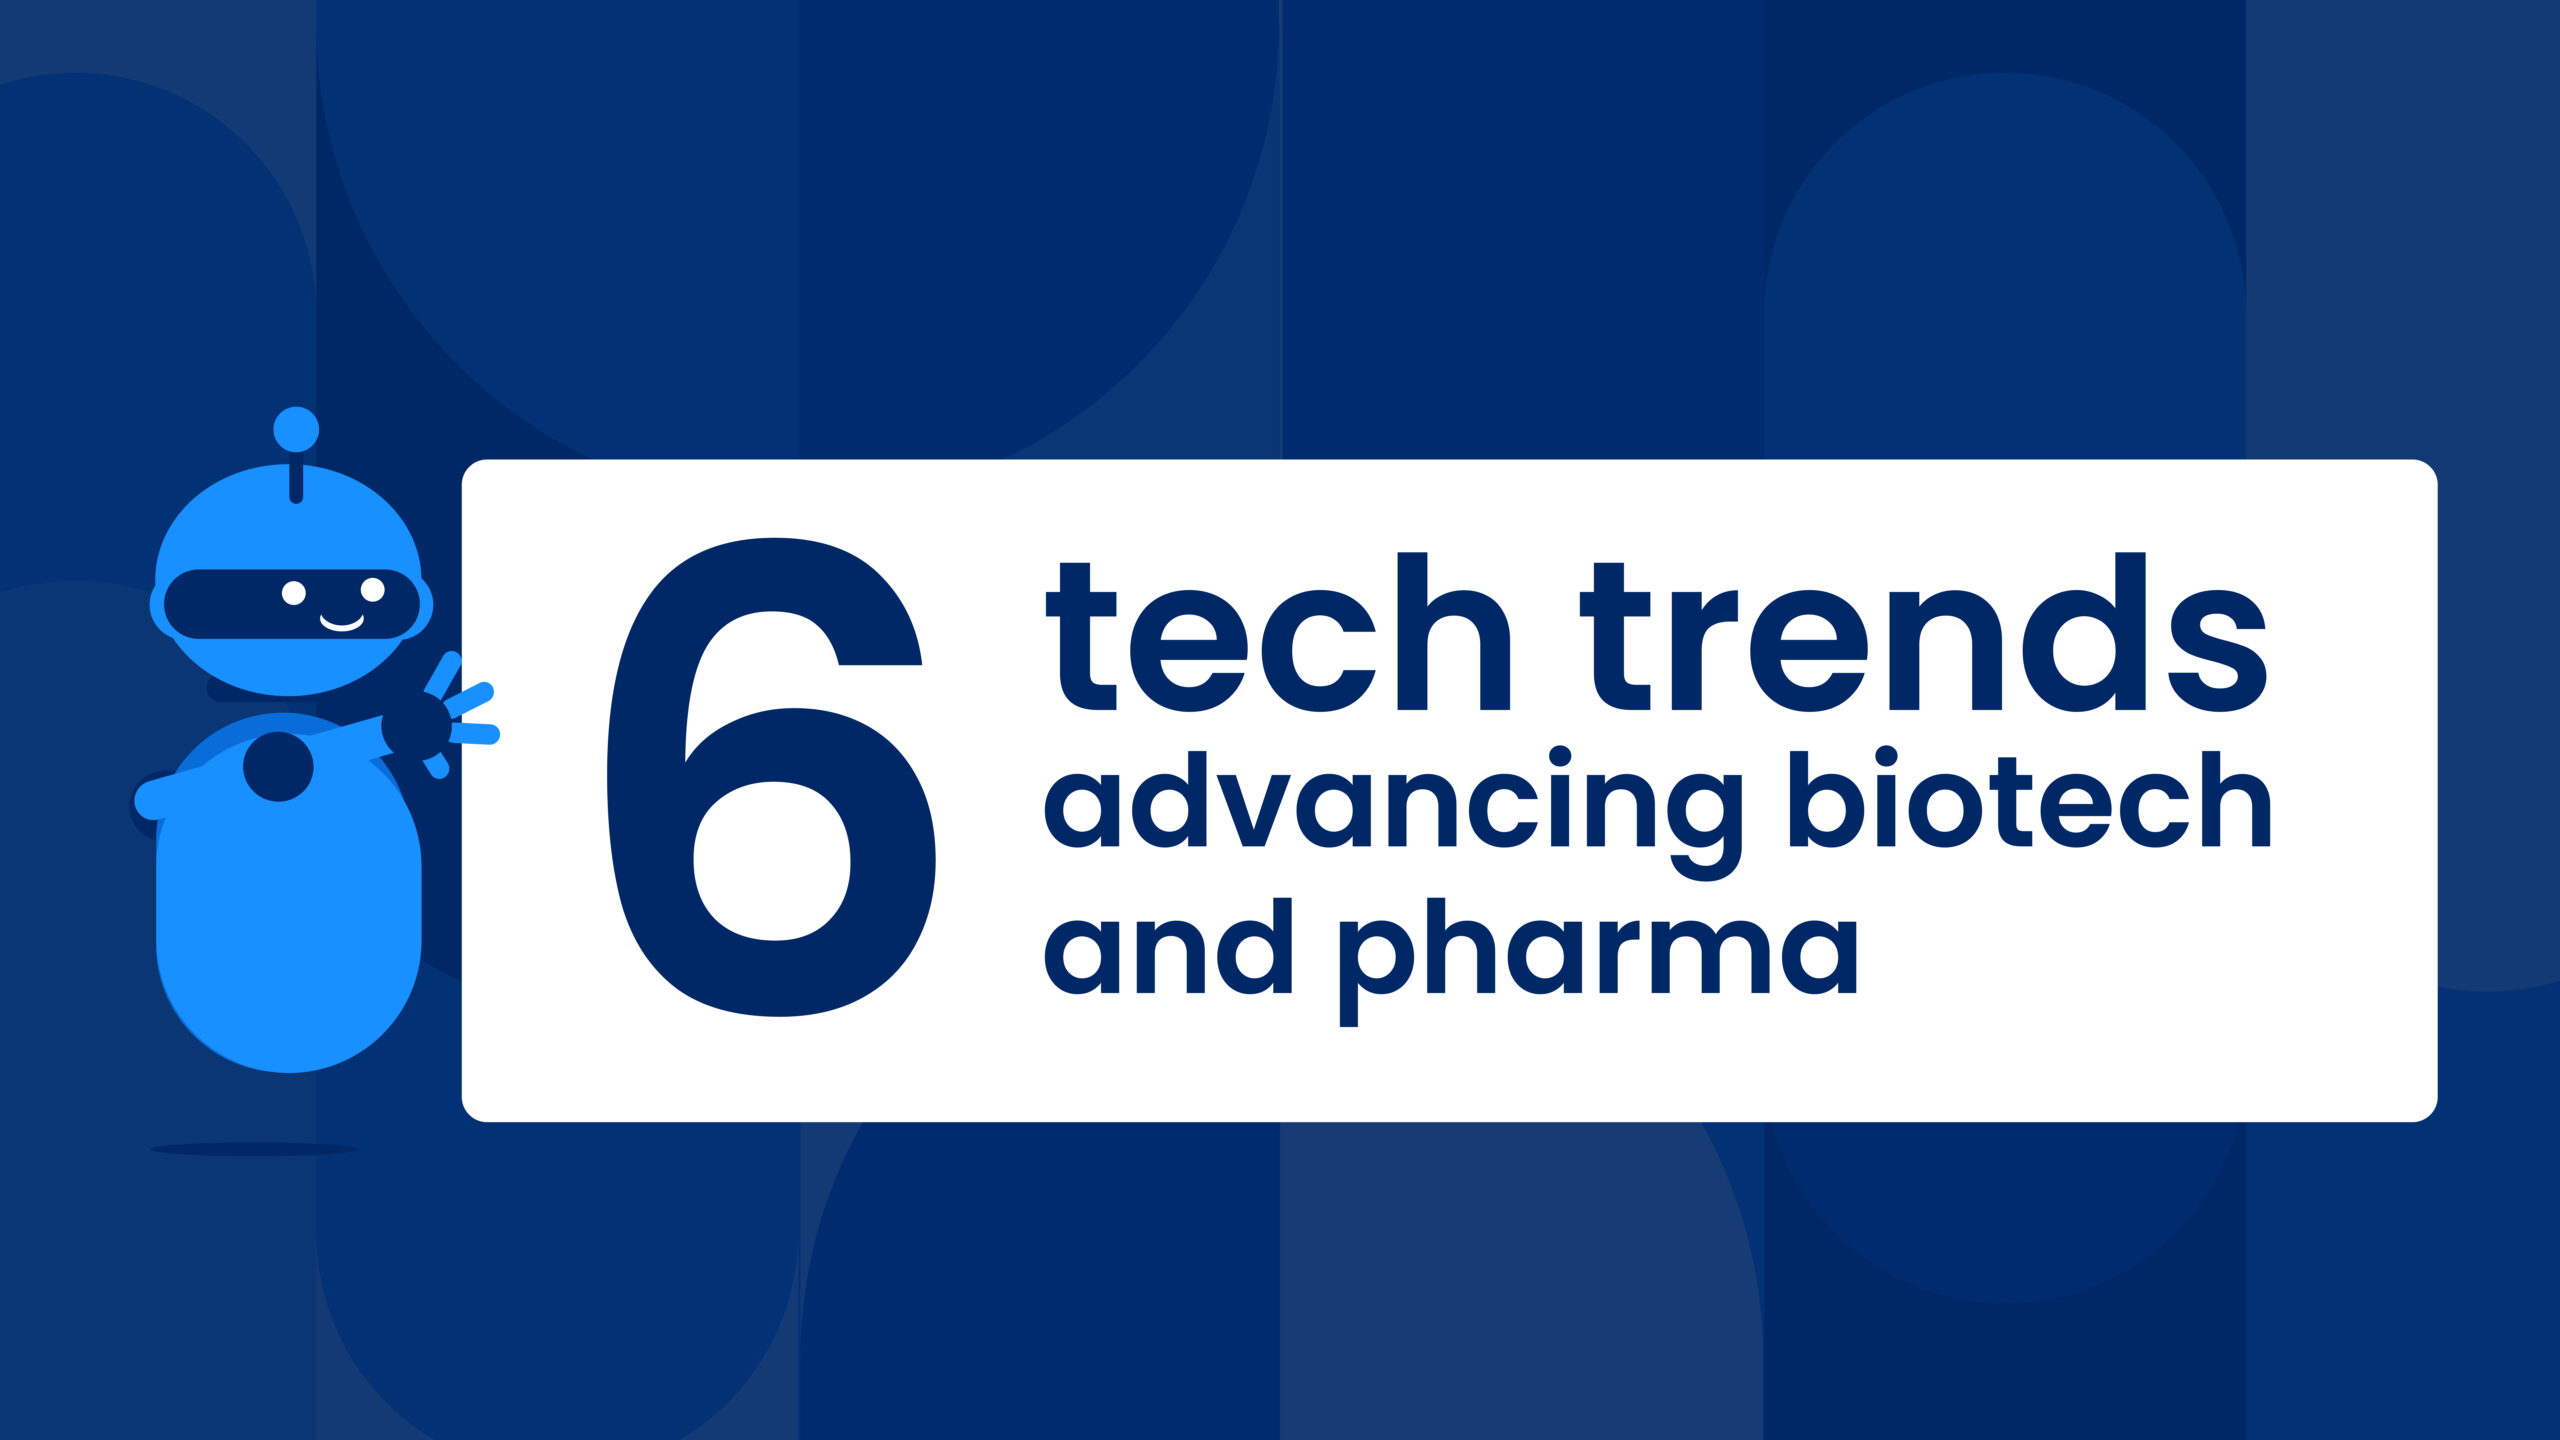 6 tech trends advancing biotech and pharma